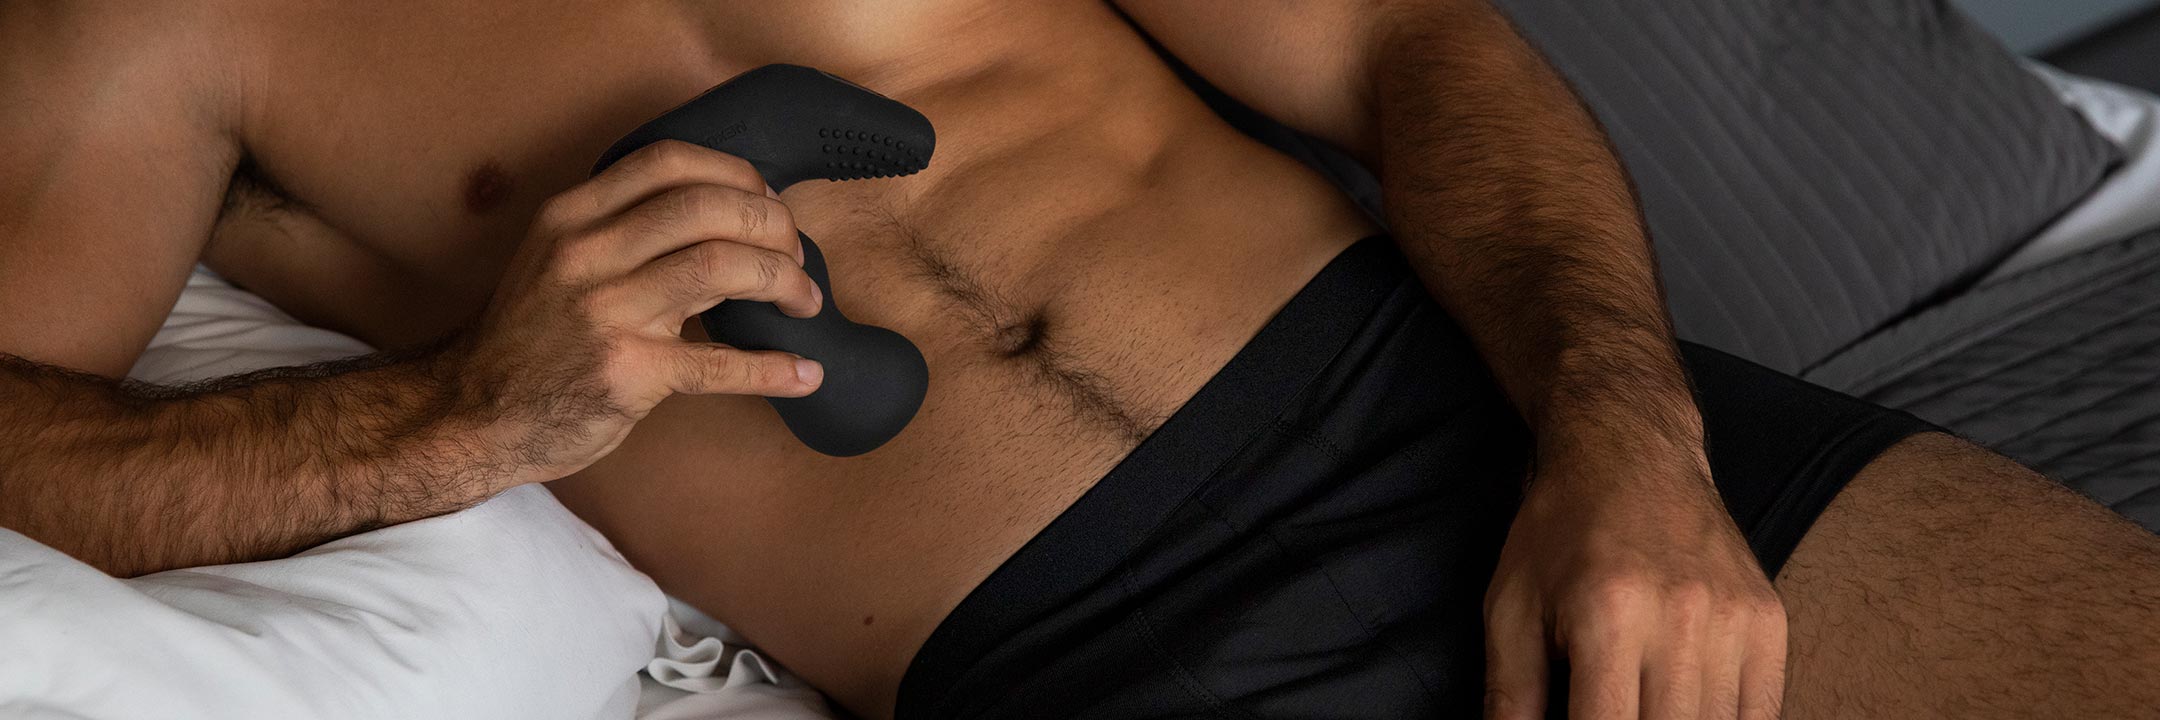 Nexus Revo Prostate Massagers - Sex Toys For Men